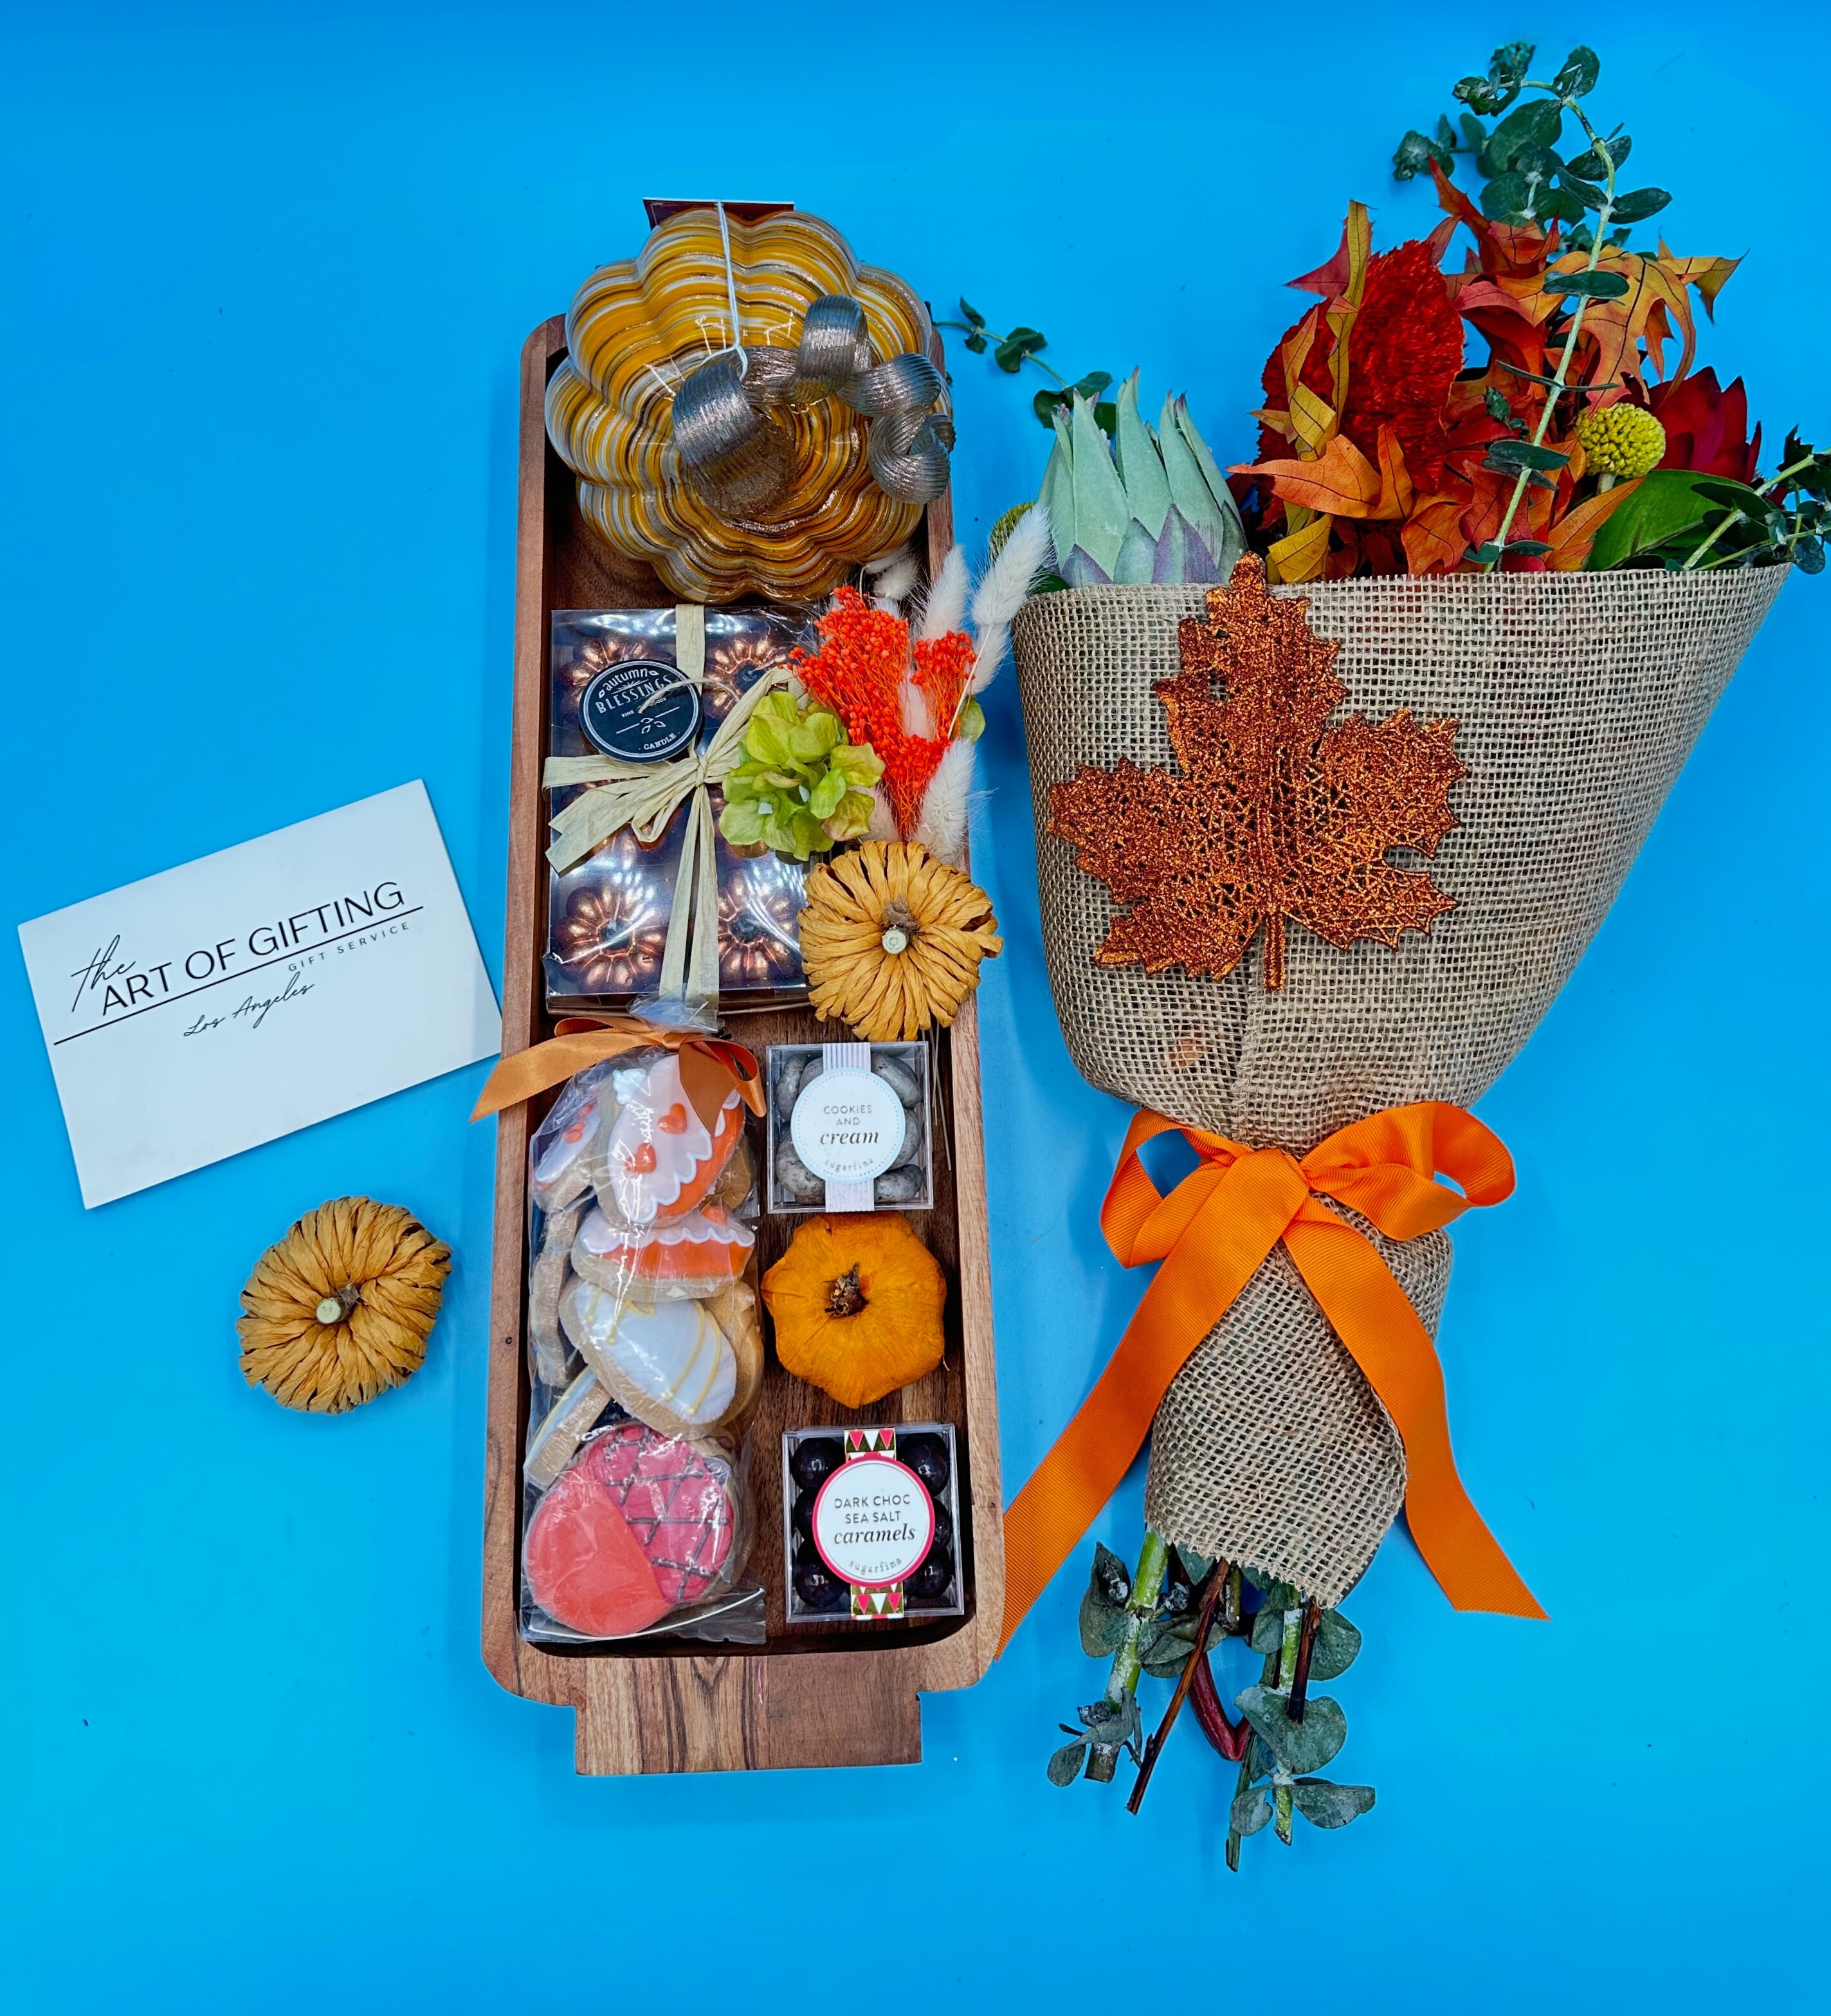 Gratefulness Gift Box – The Art of Gifting